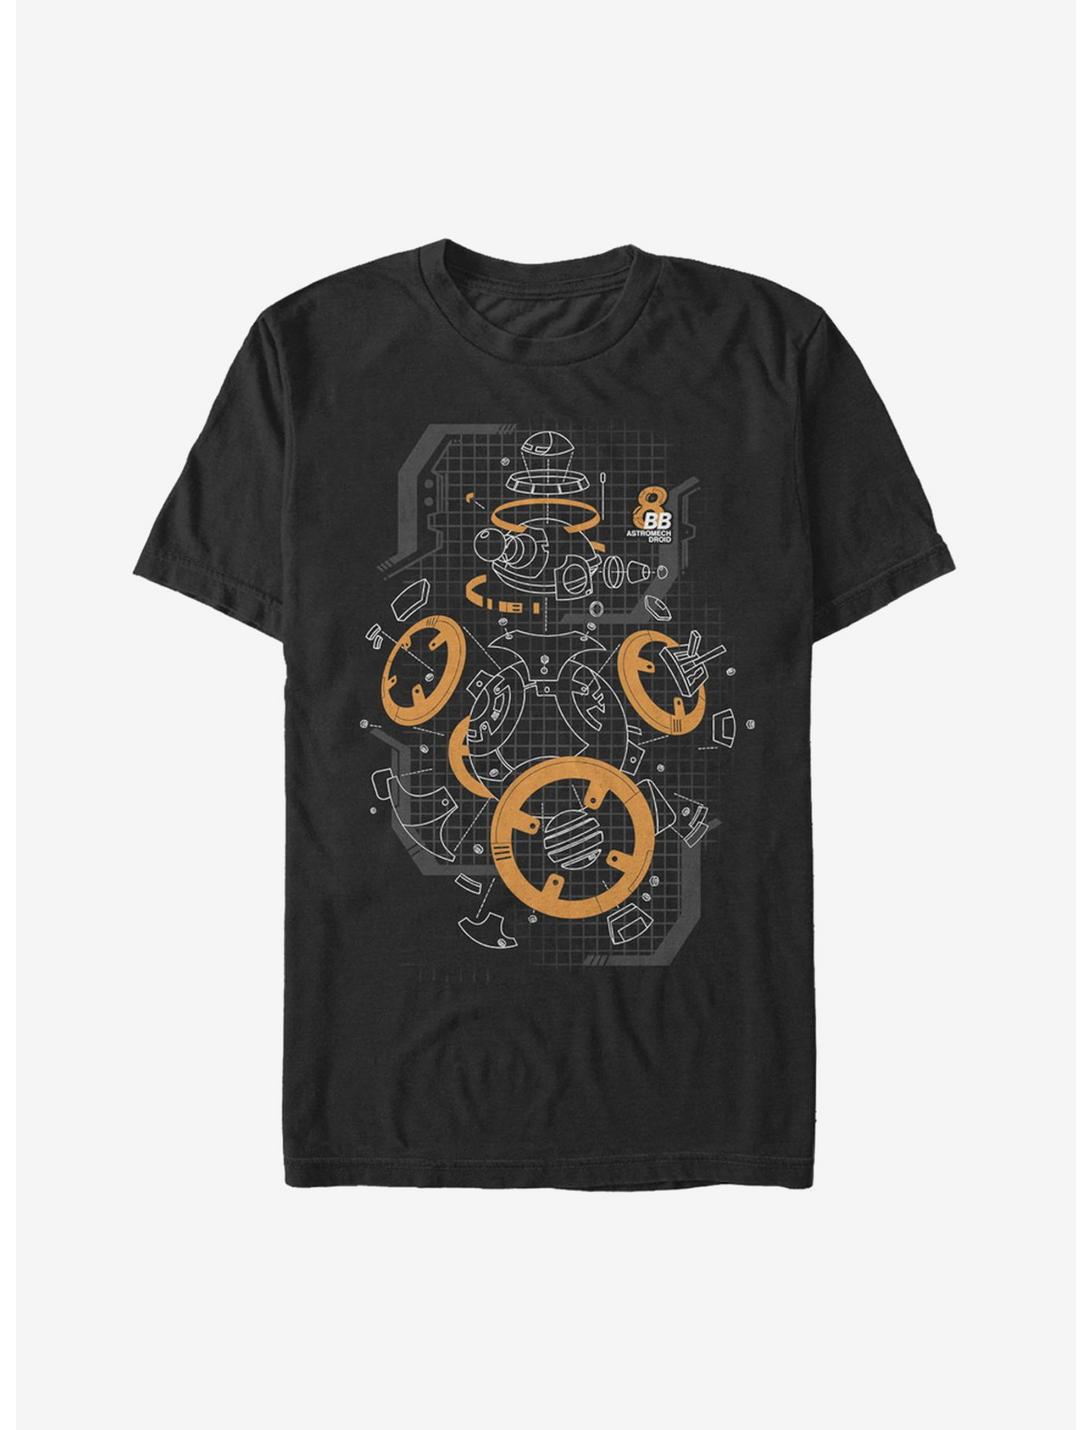 Plus Size Star Wars BB-8 Deconstructed View T-Shirt, BLACK, hi-res